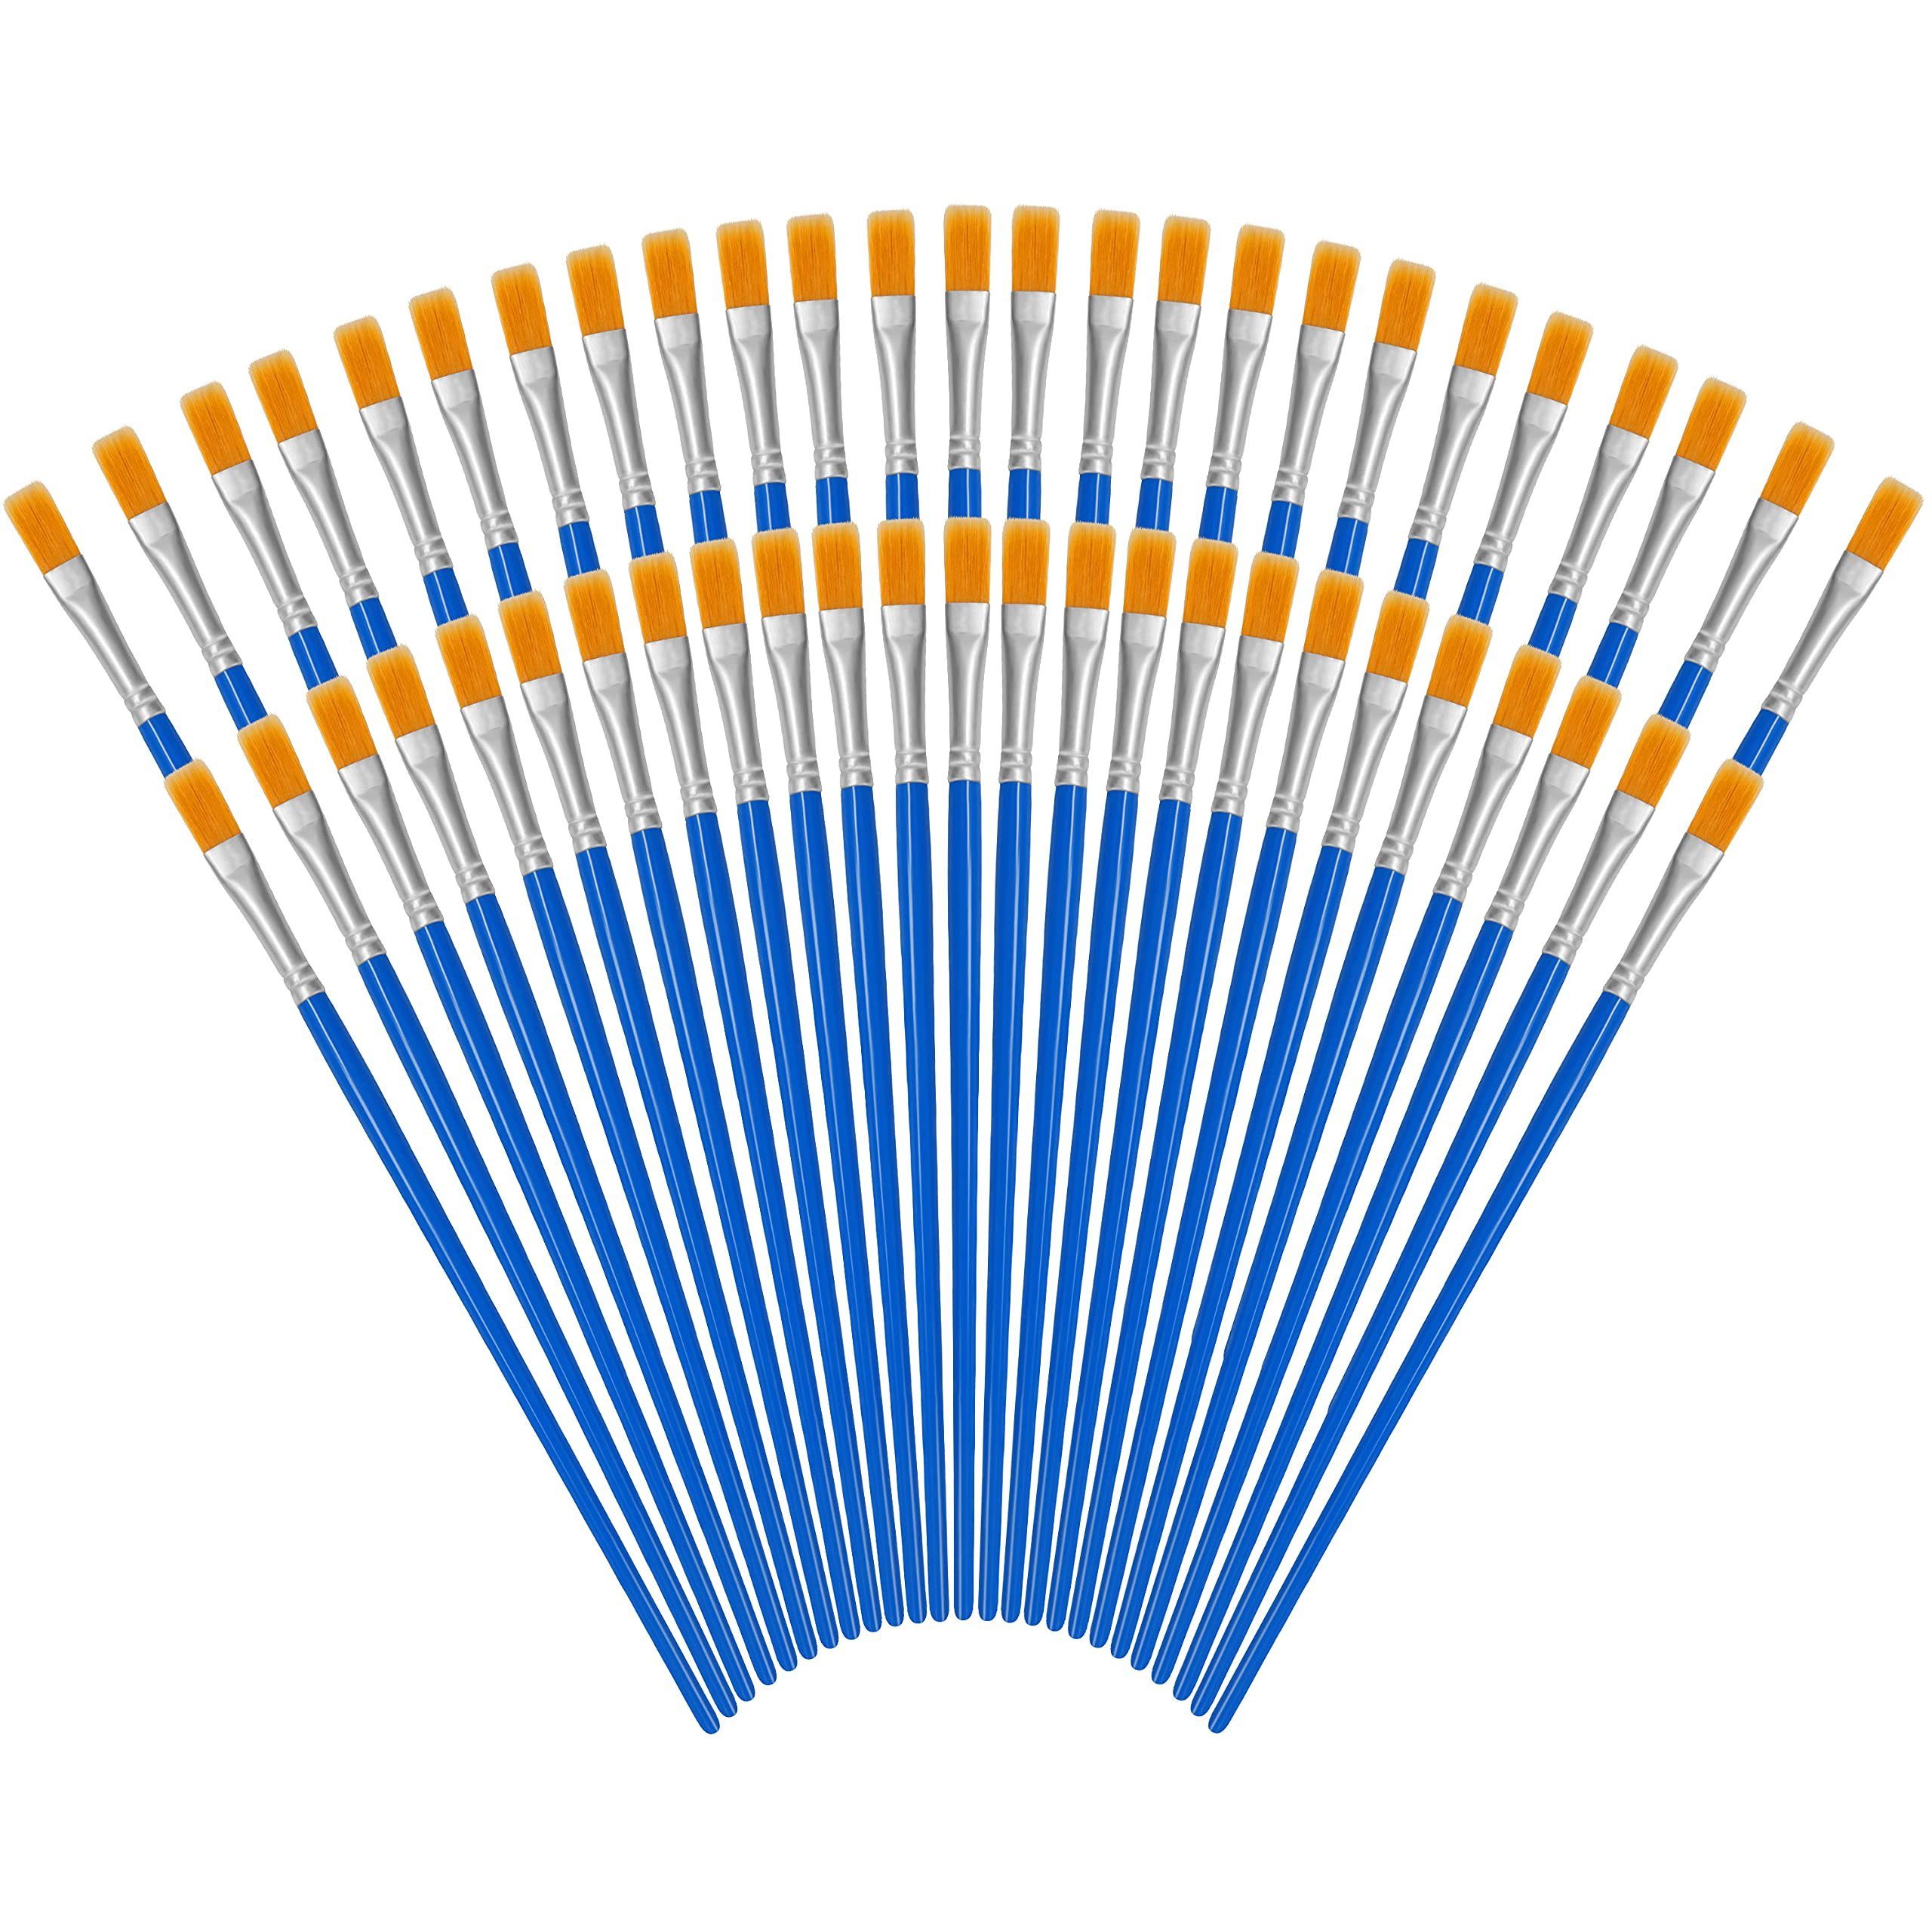 Kurtzy Pinsel Blaue Flachpinsel (50 Stück) für Aquarell, Öl und Acryl (60 bytes), Pro Pinselset: Blaue Flachpinsel (50er Pack) für Aquarell, Öl & Acryl